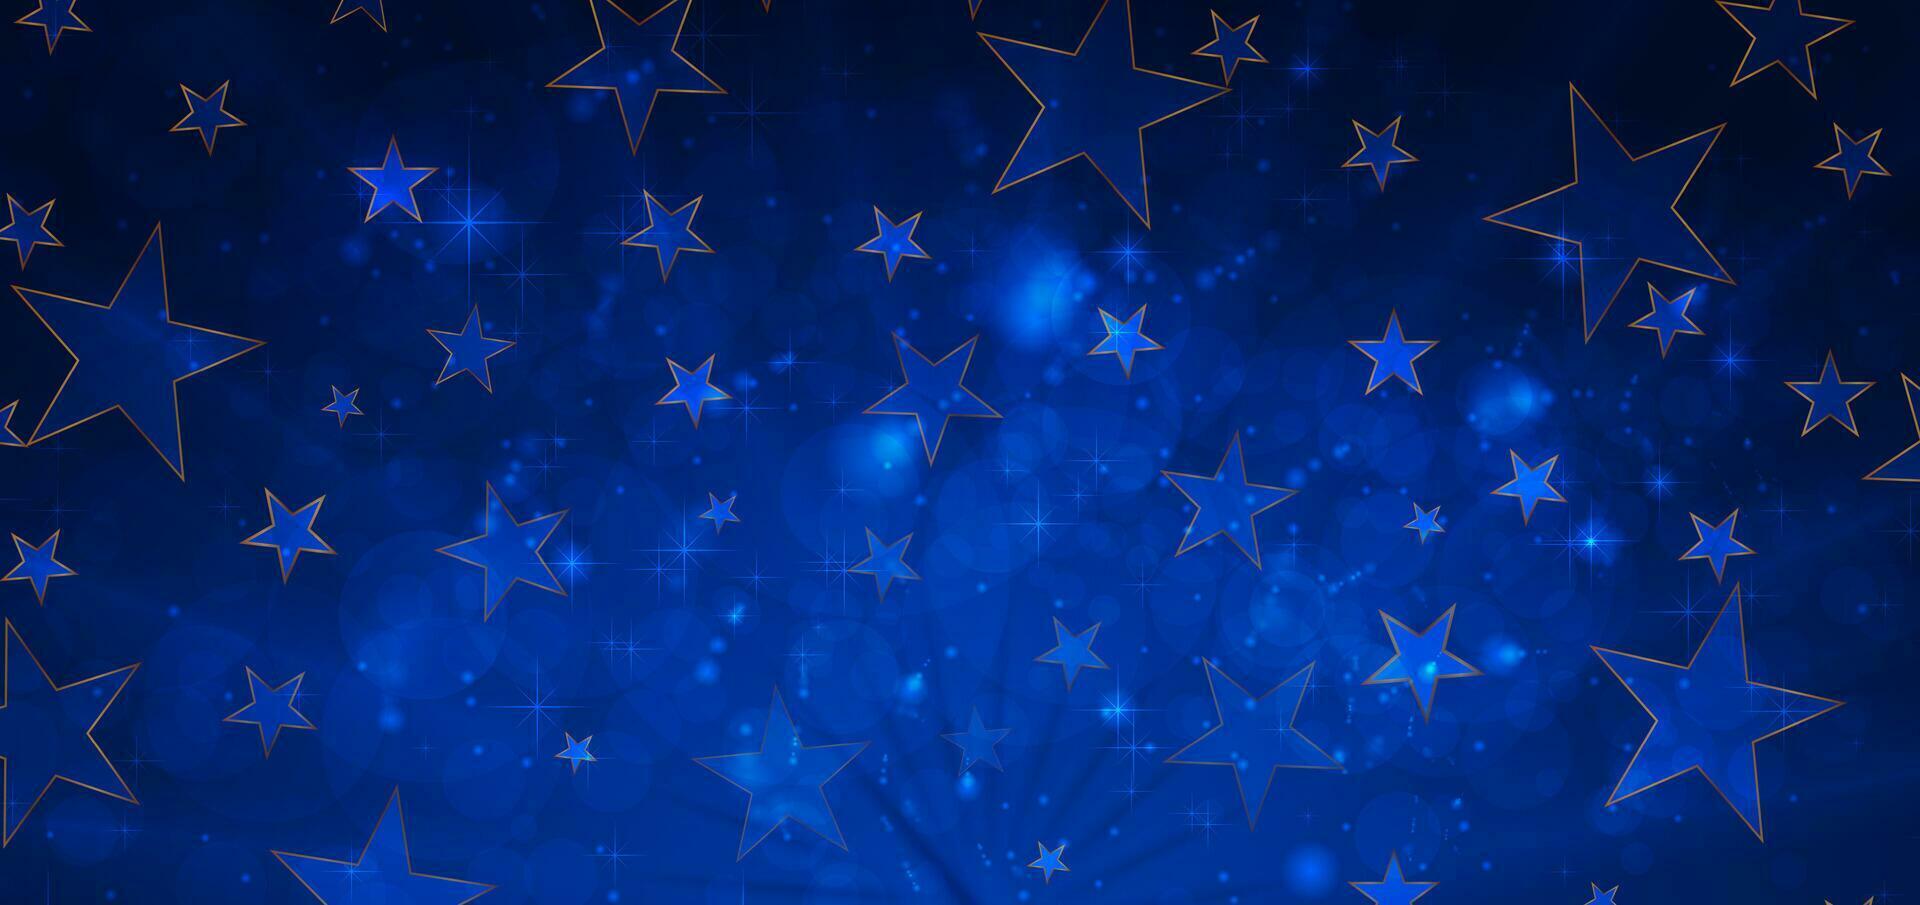 Dark blue shiny background with golden stars vector